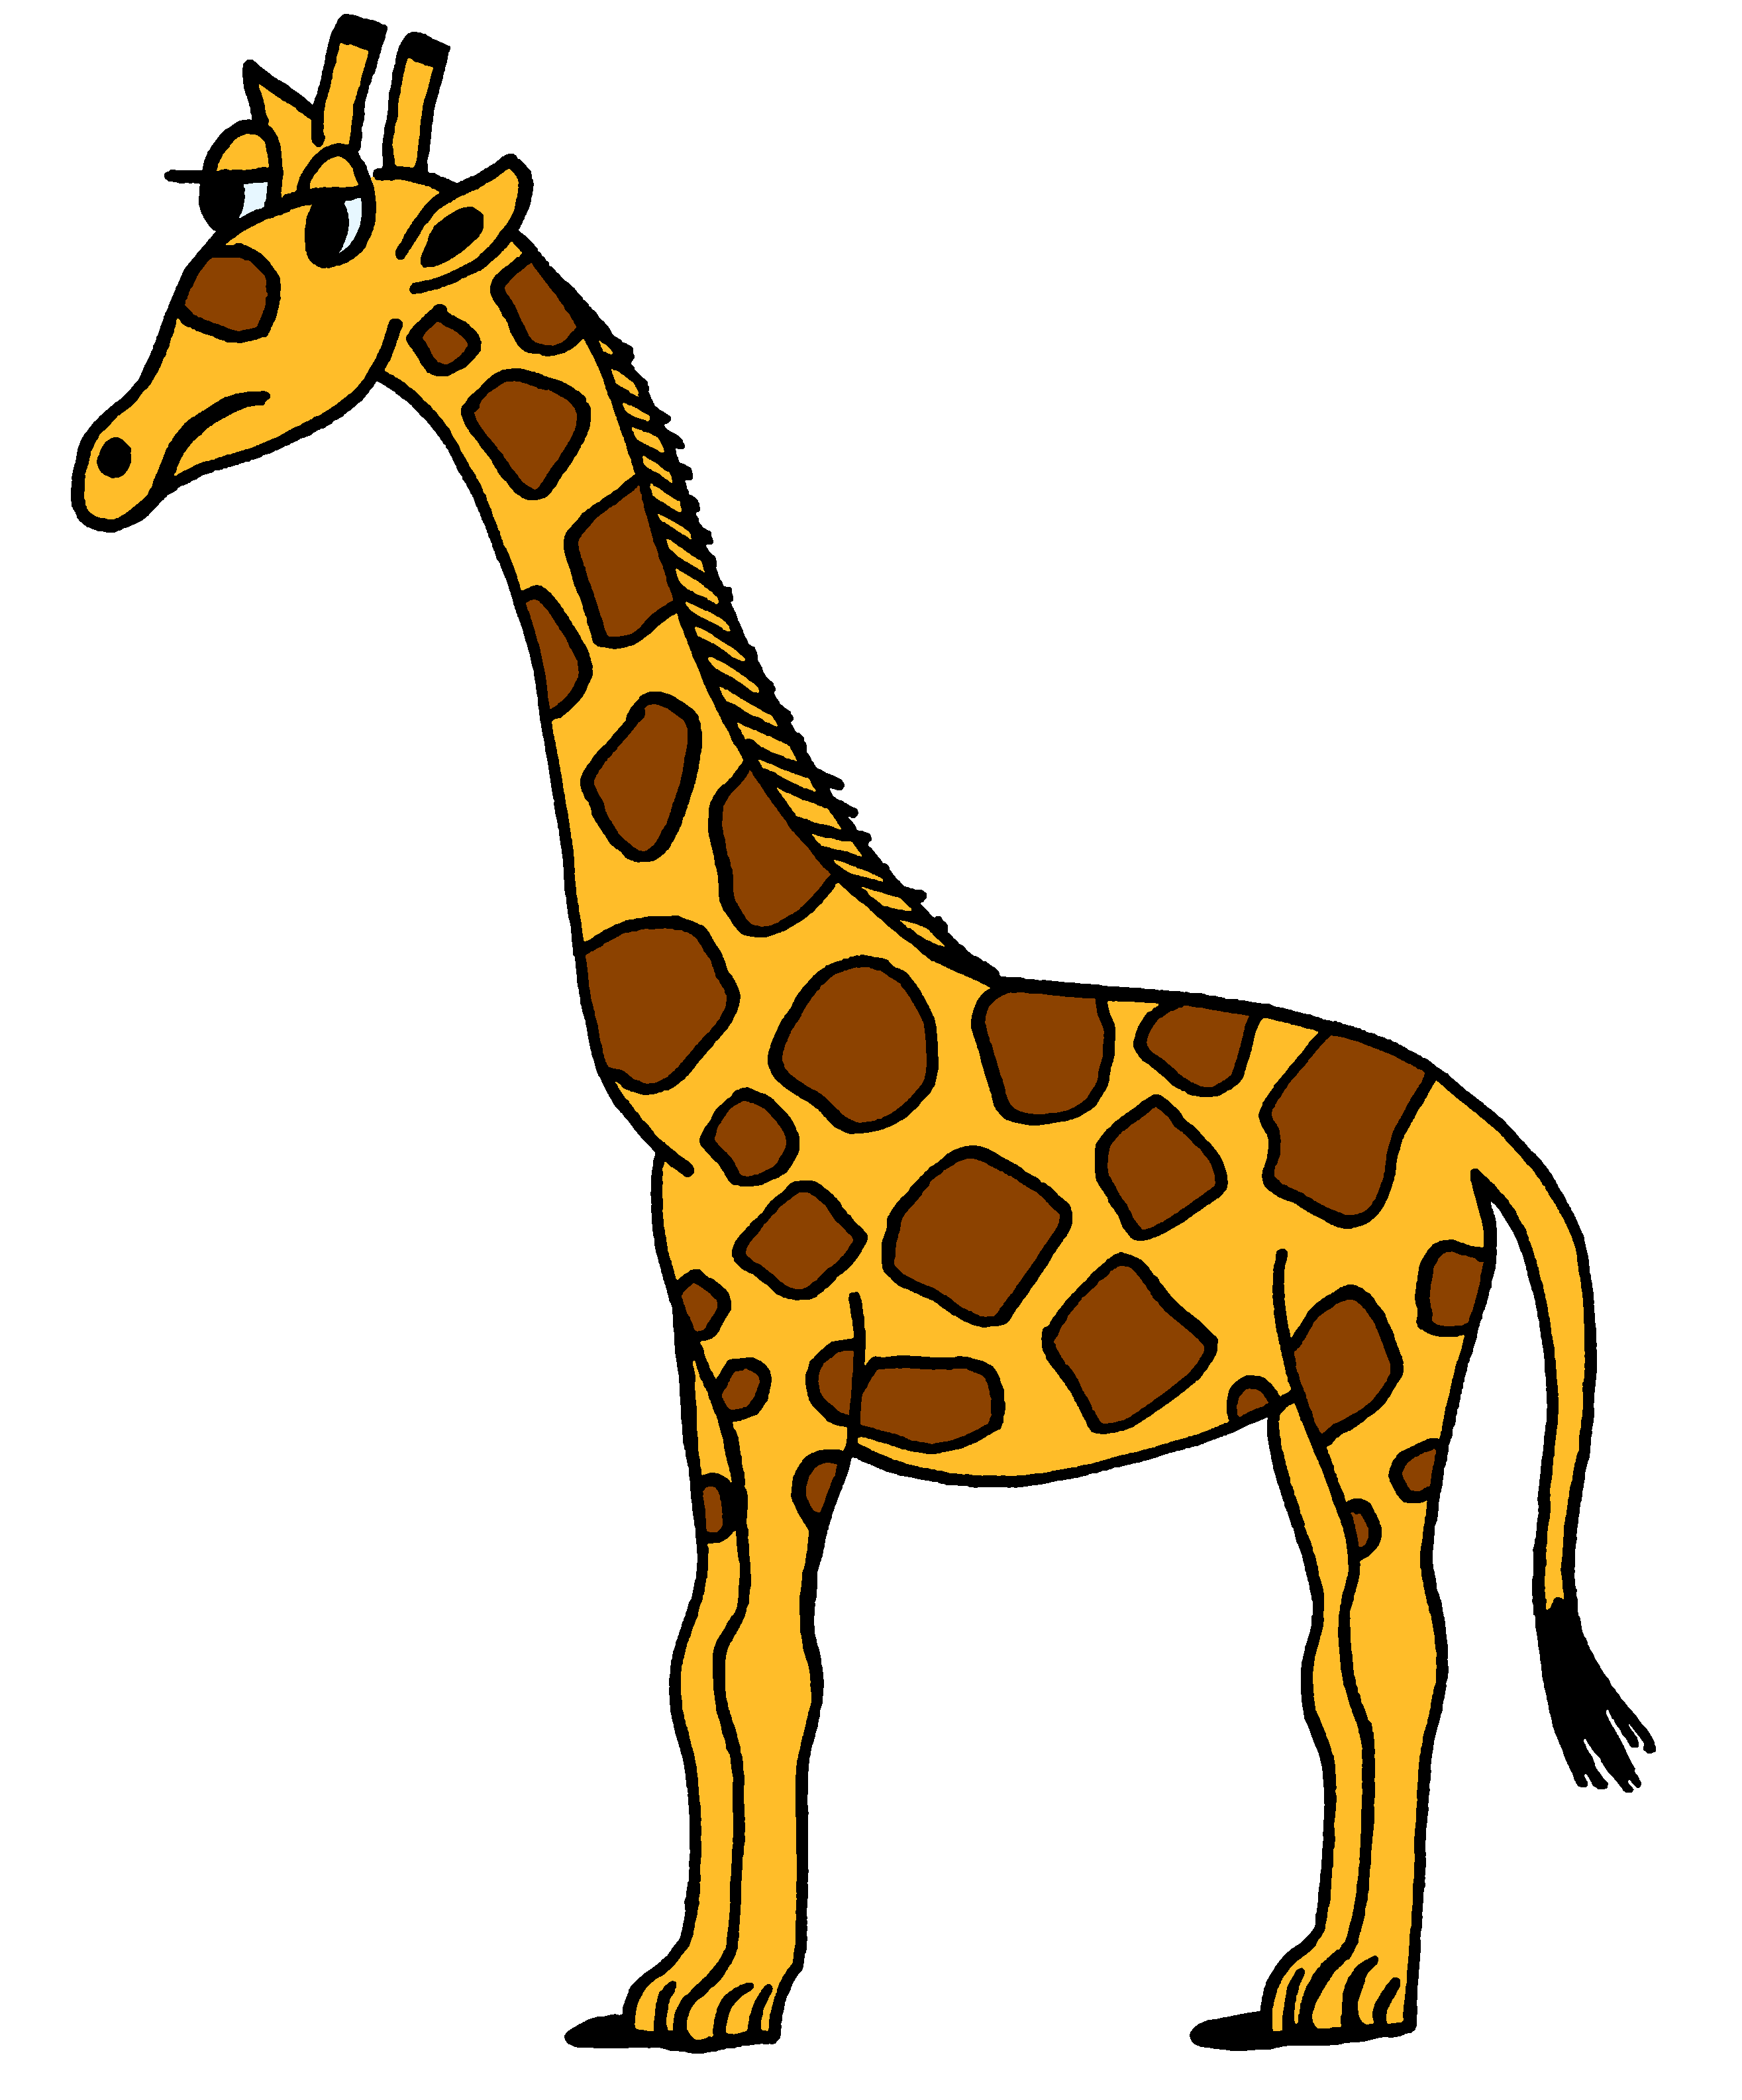 Giraffe clipart clipartfox.